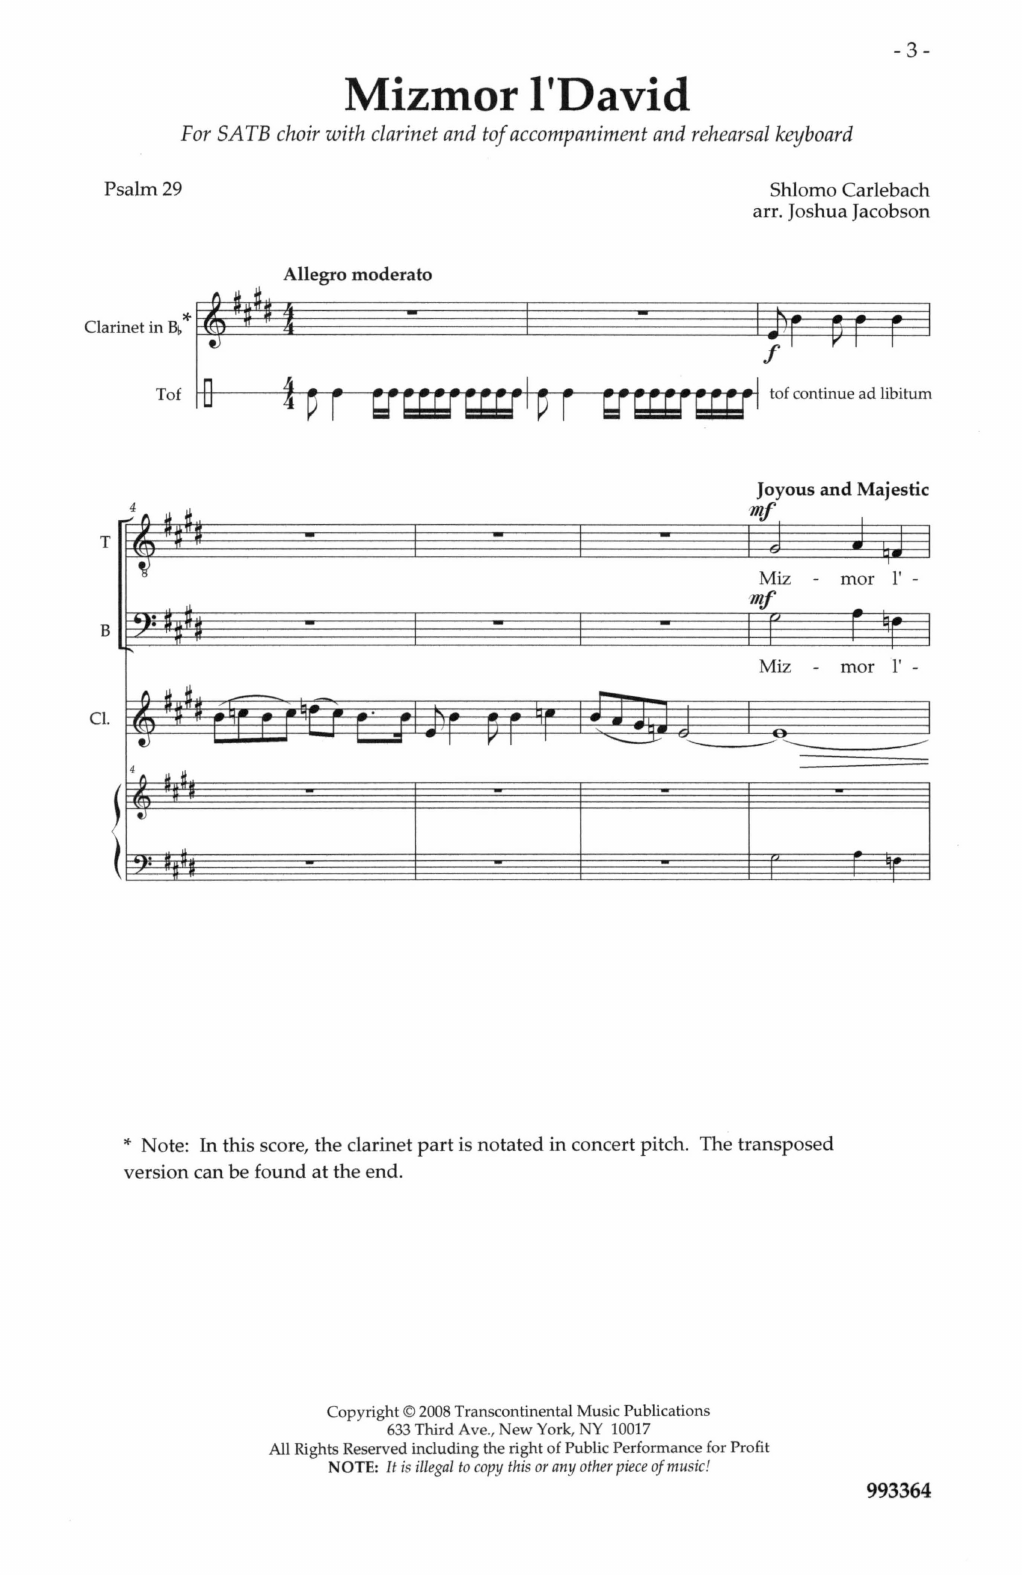 Download Joshua Jacobson Mizmor L'David (Psalm 29) Sheet Music